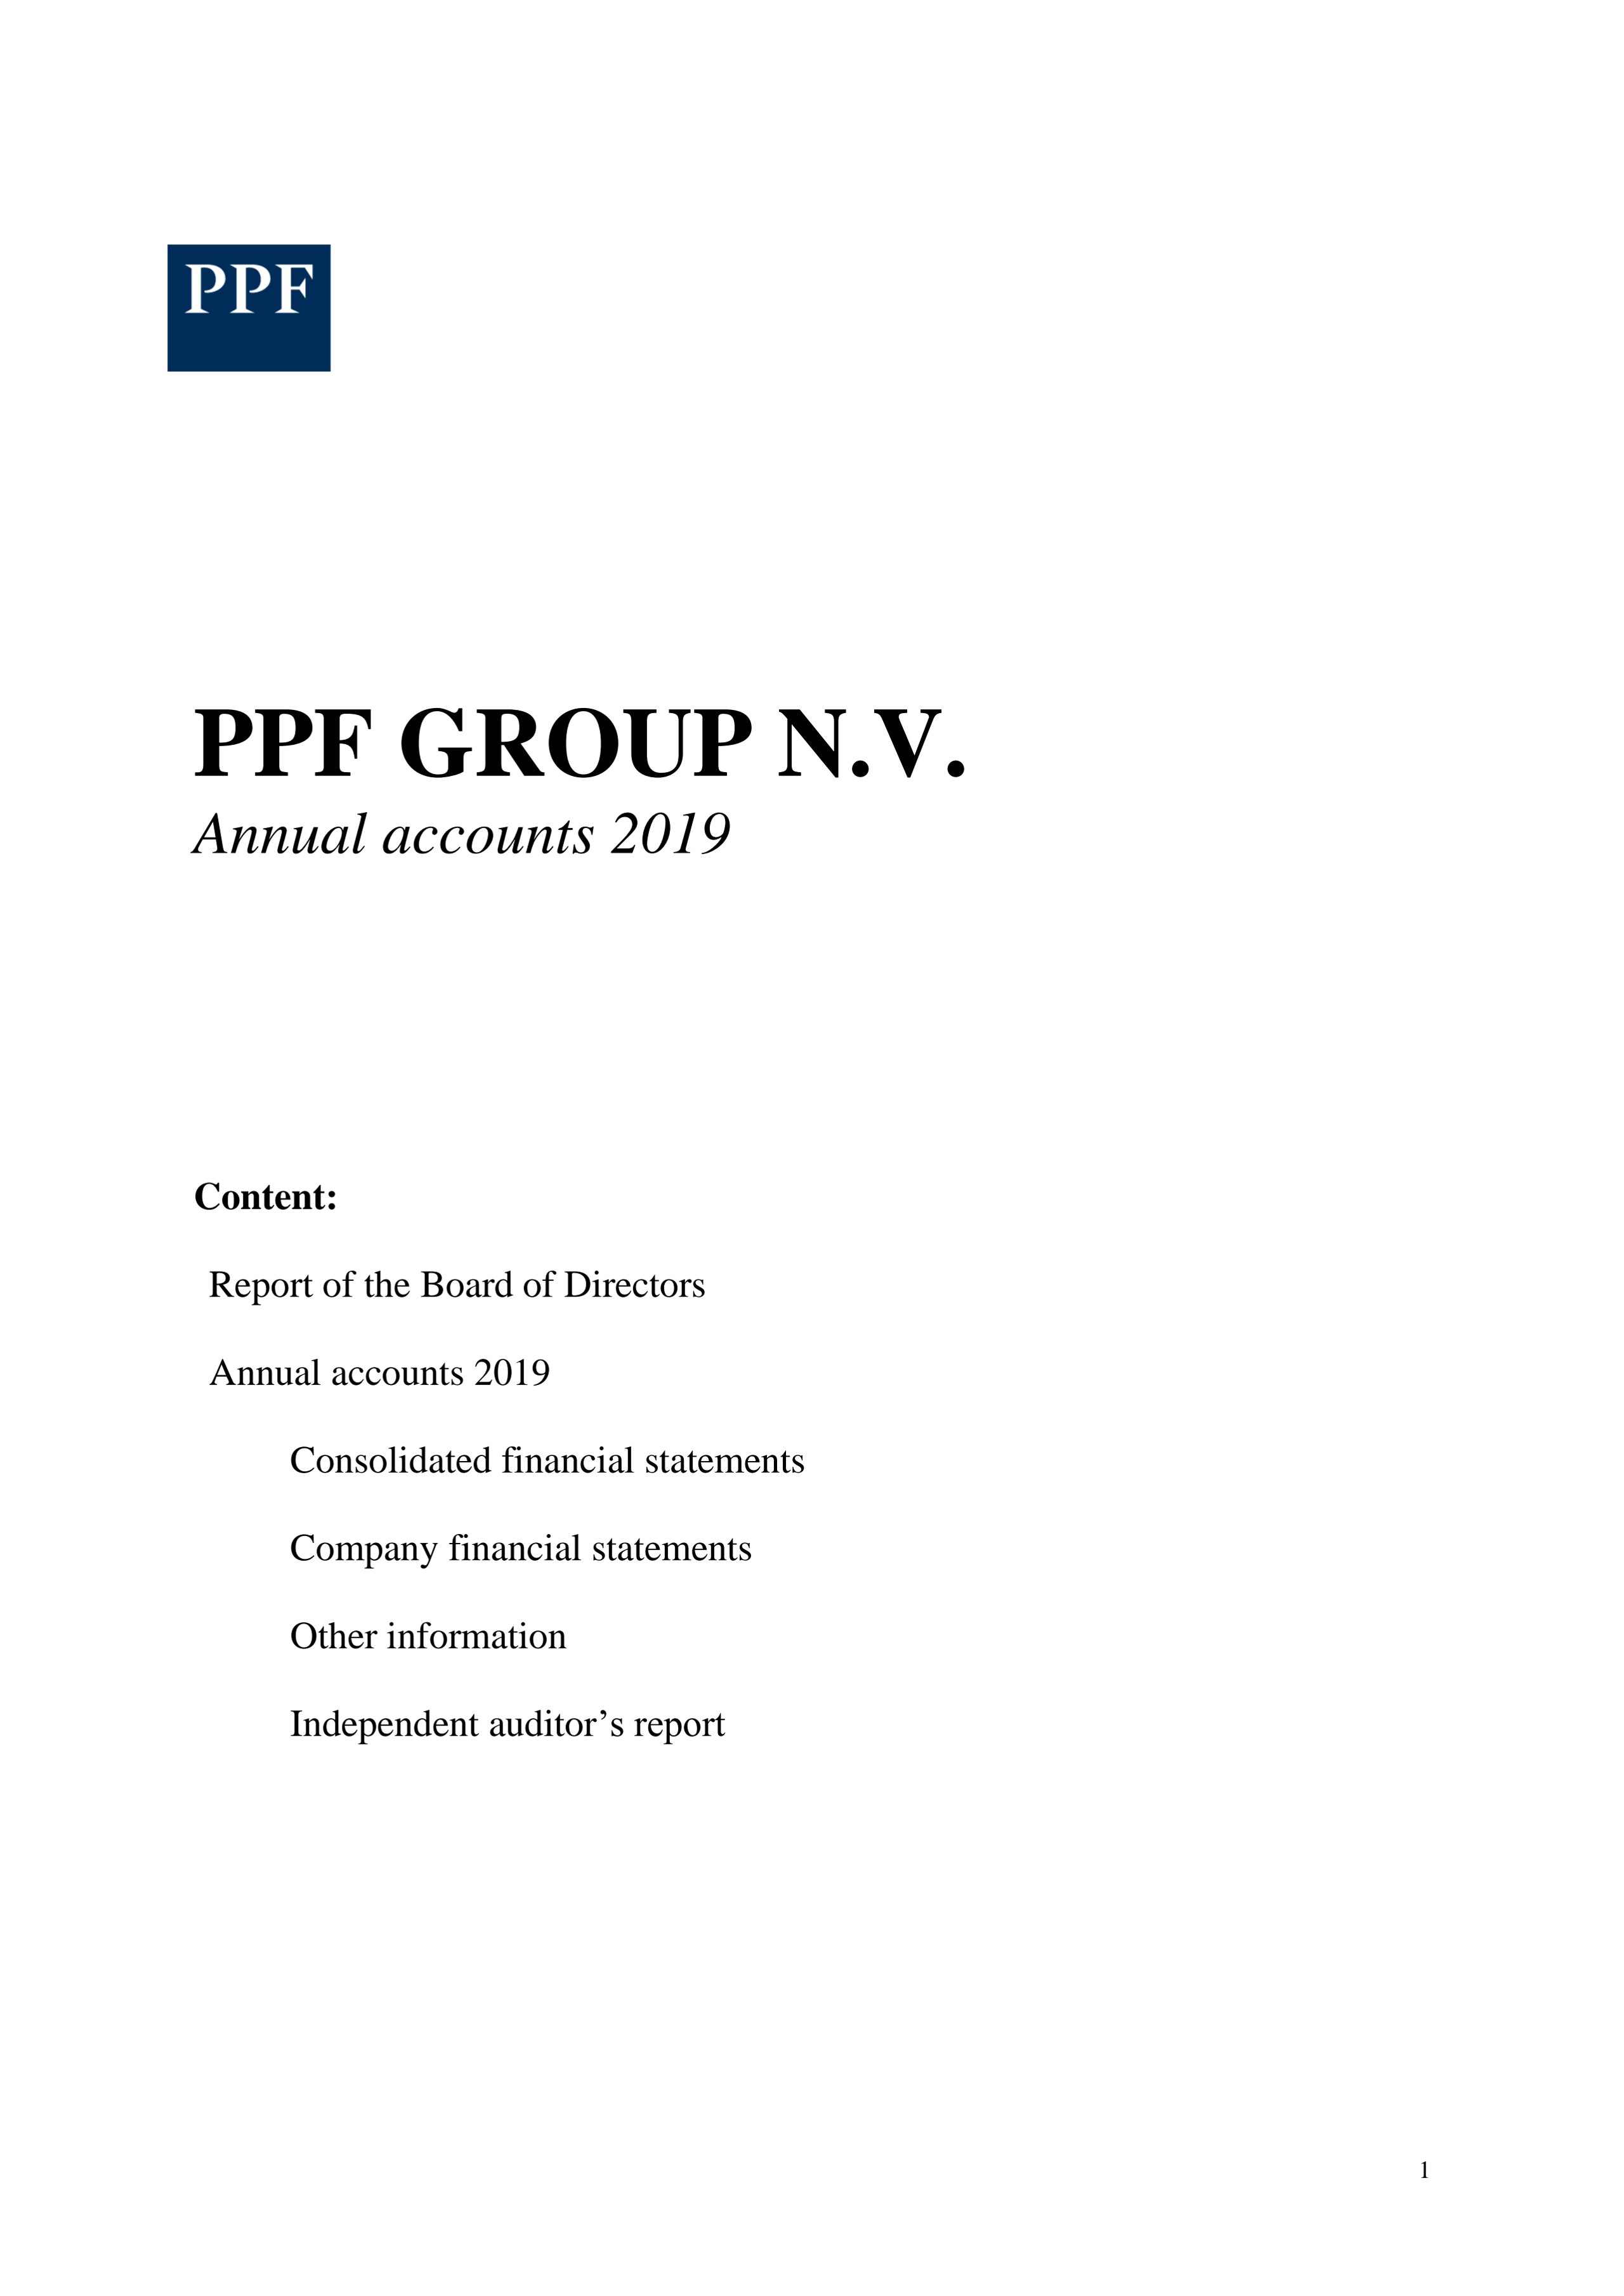 PPF Group N.V. Annual Accounts 2019 (1/6/2019)